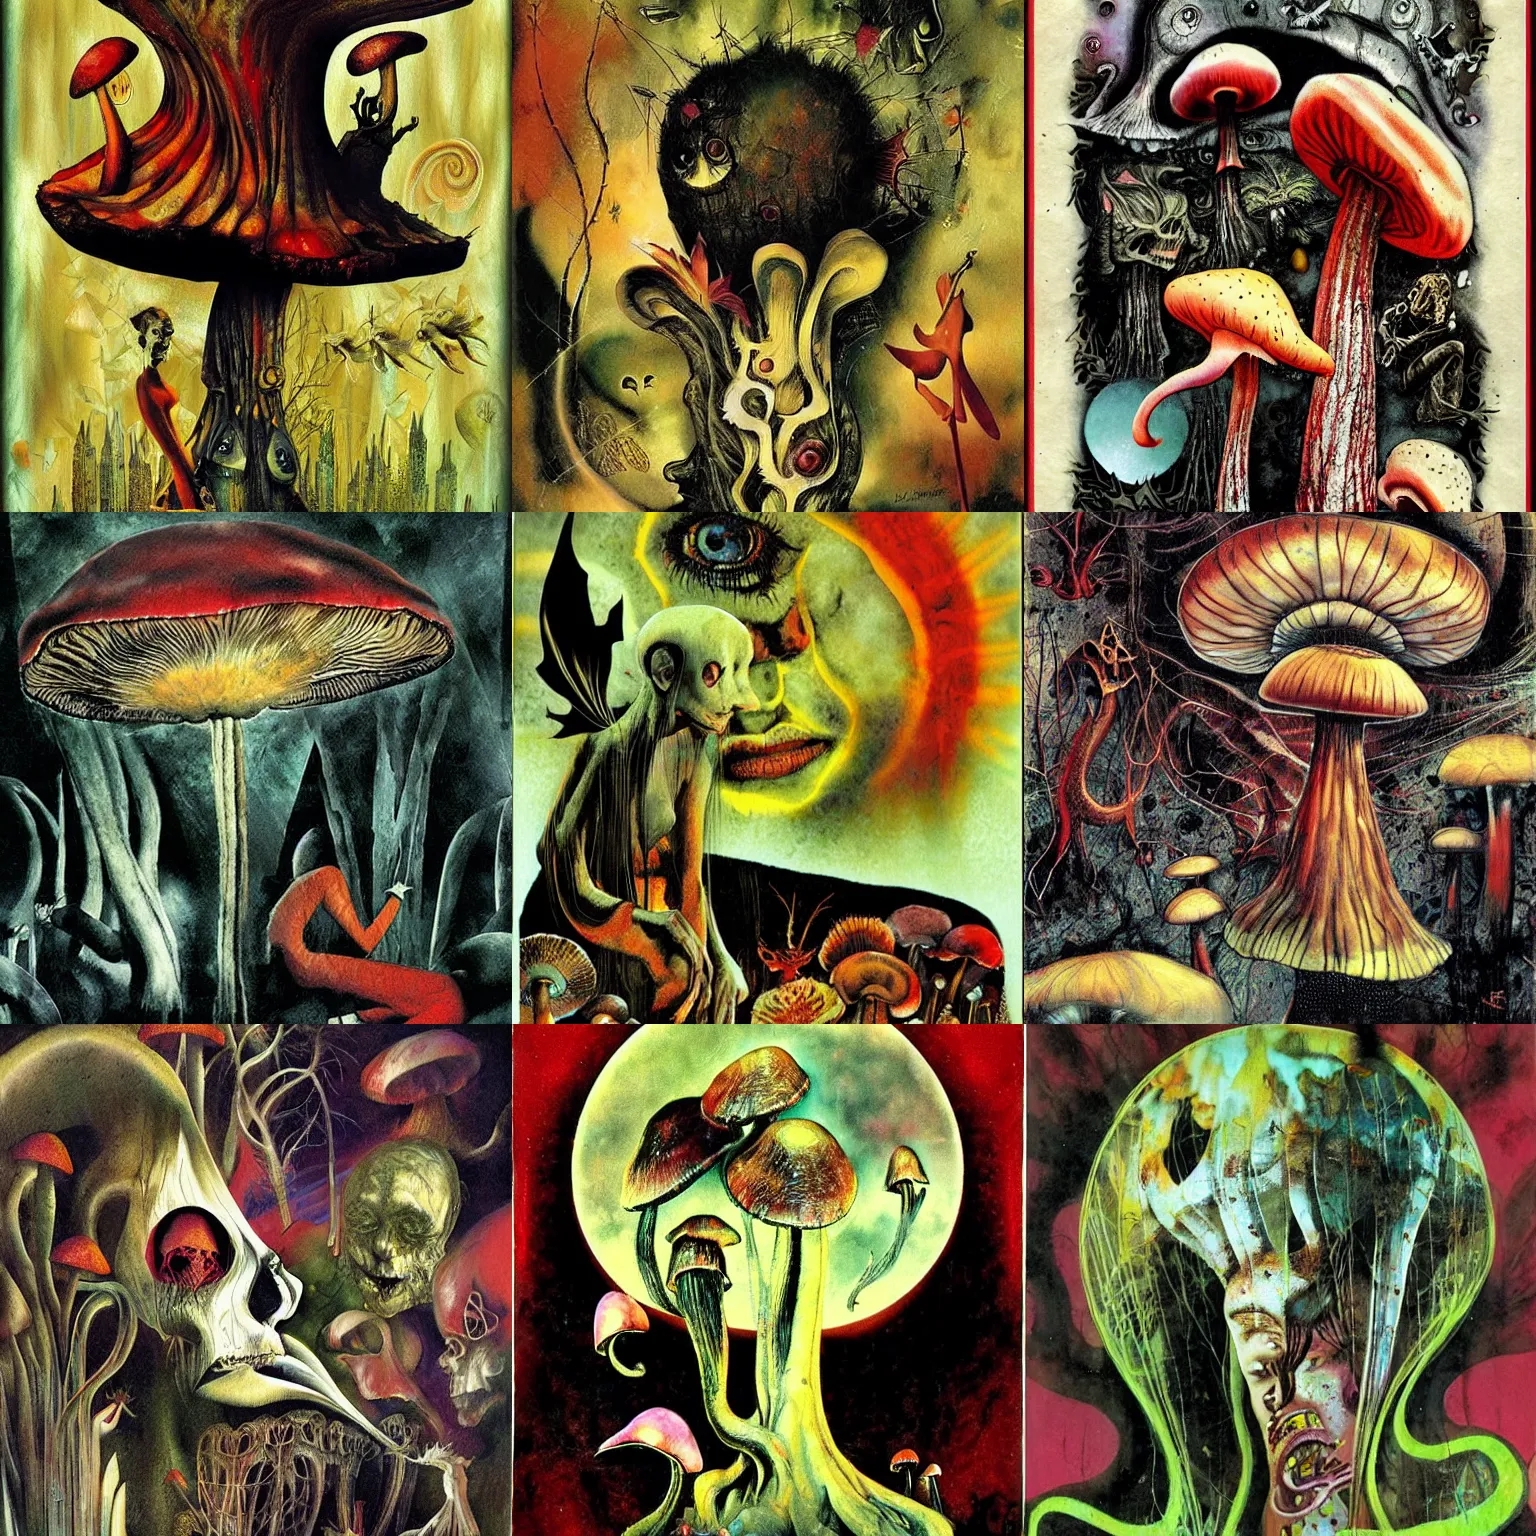 Prompt: psychedelic mushrooms dream, carabelas y diablitos, by dave mckean